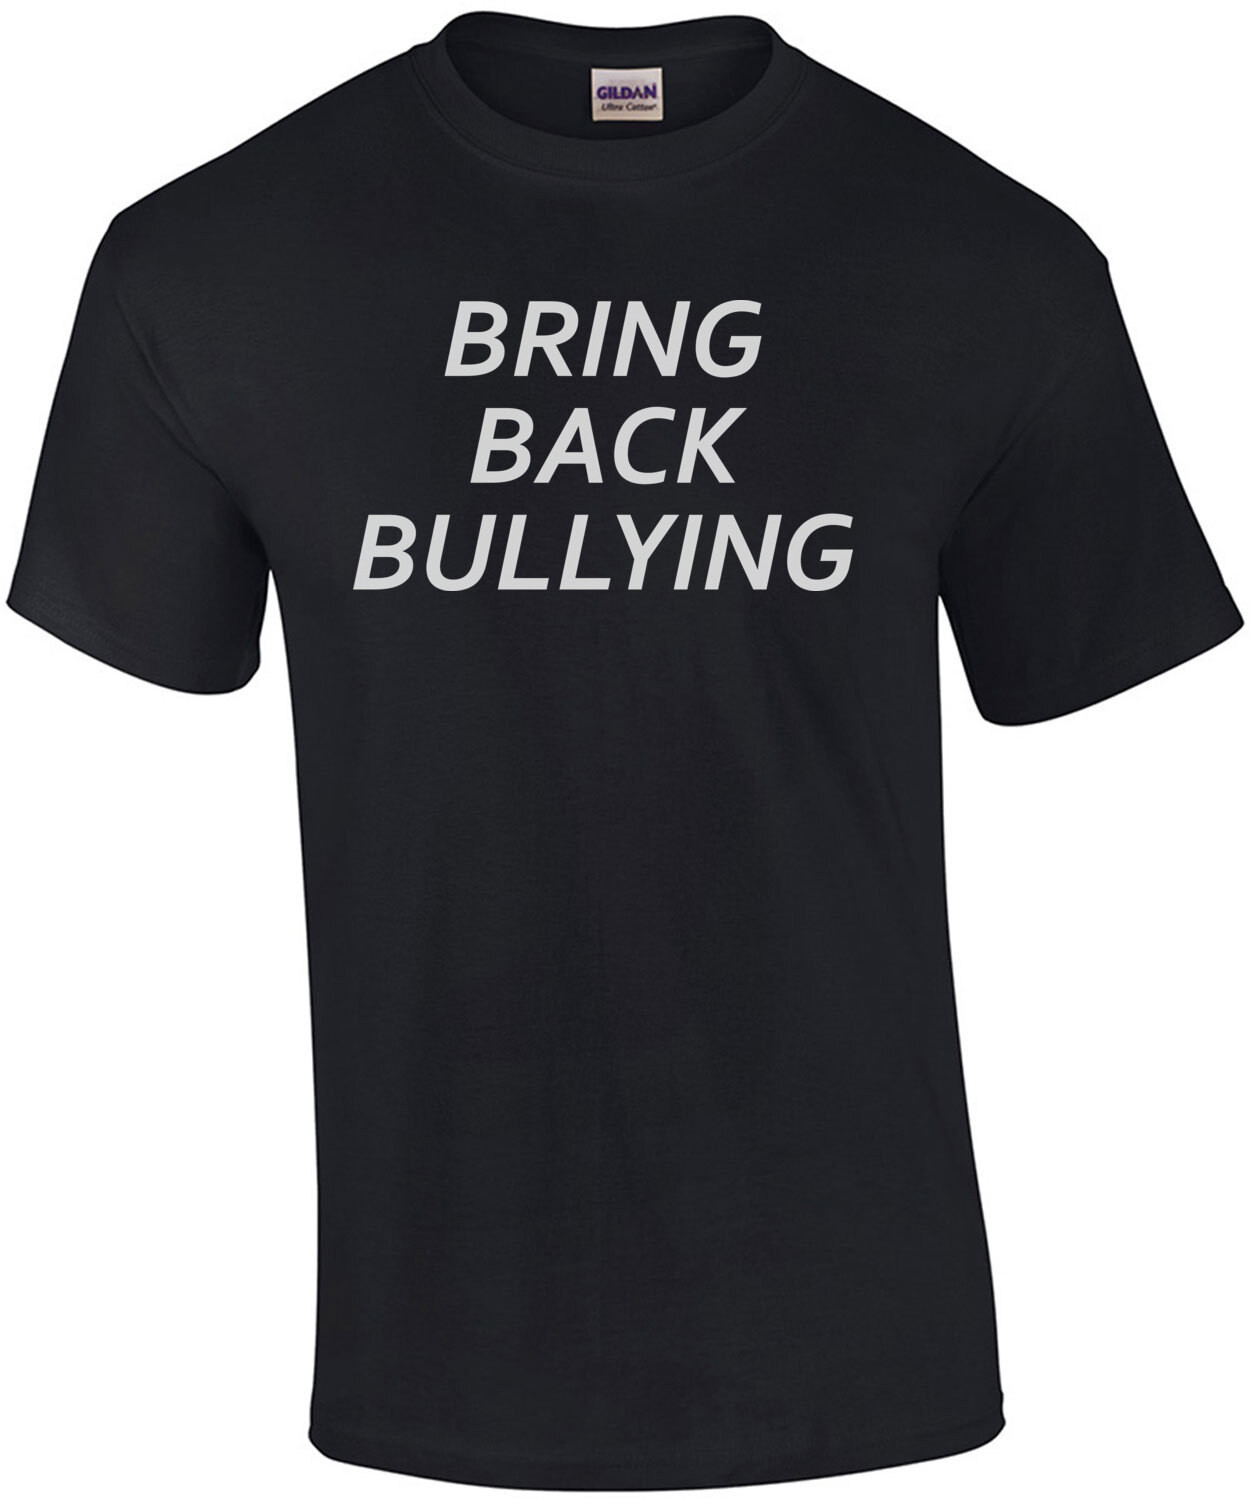 BRING BACK BULLYING - Funny Sarcastic T-Shirt